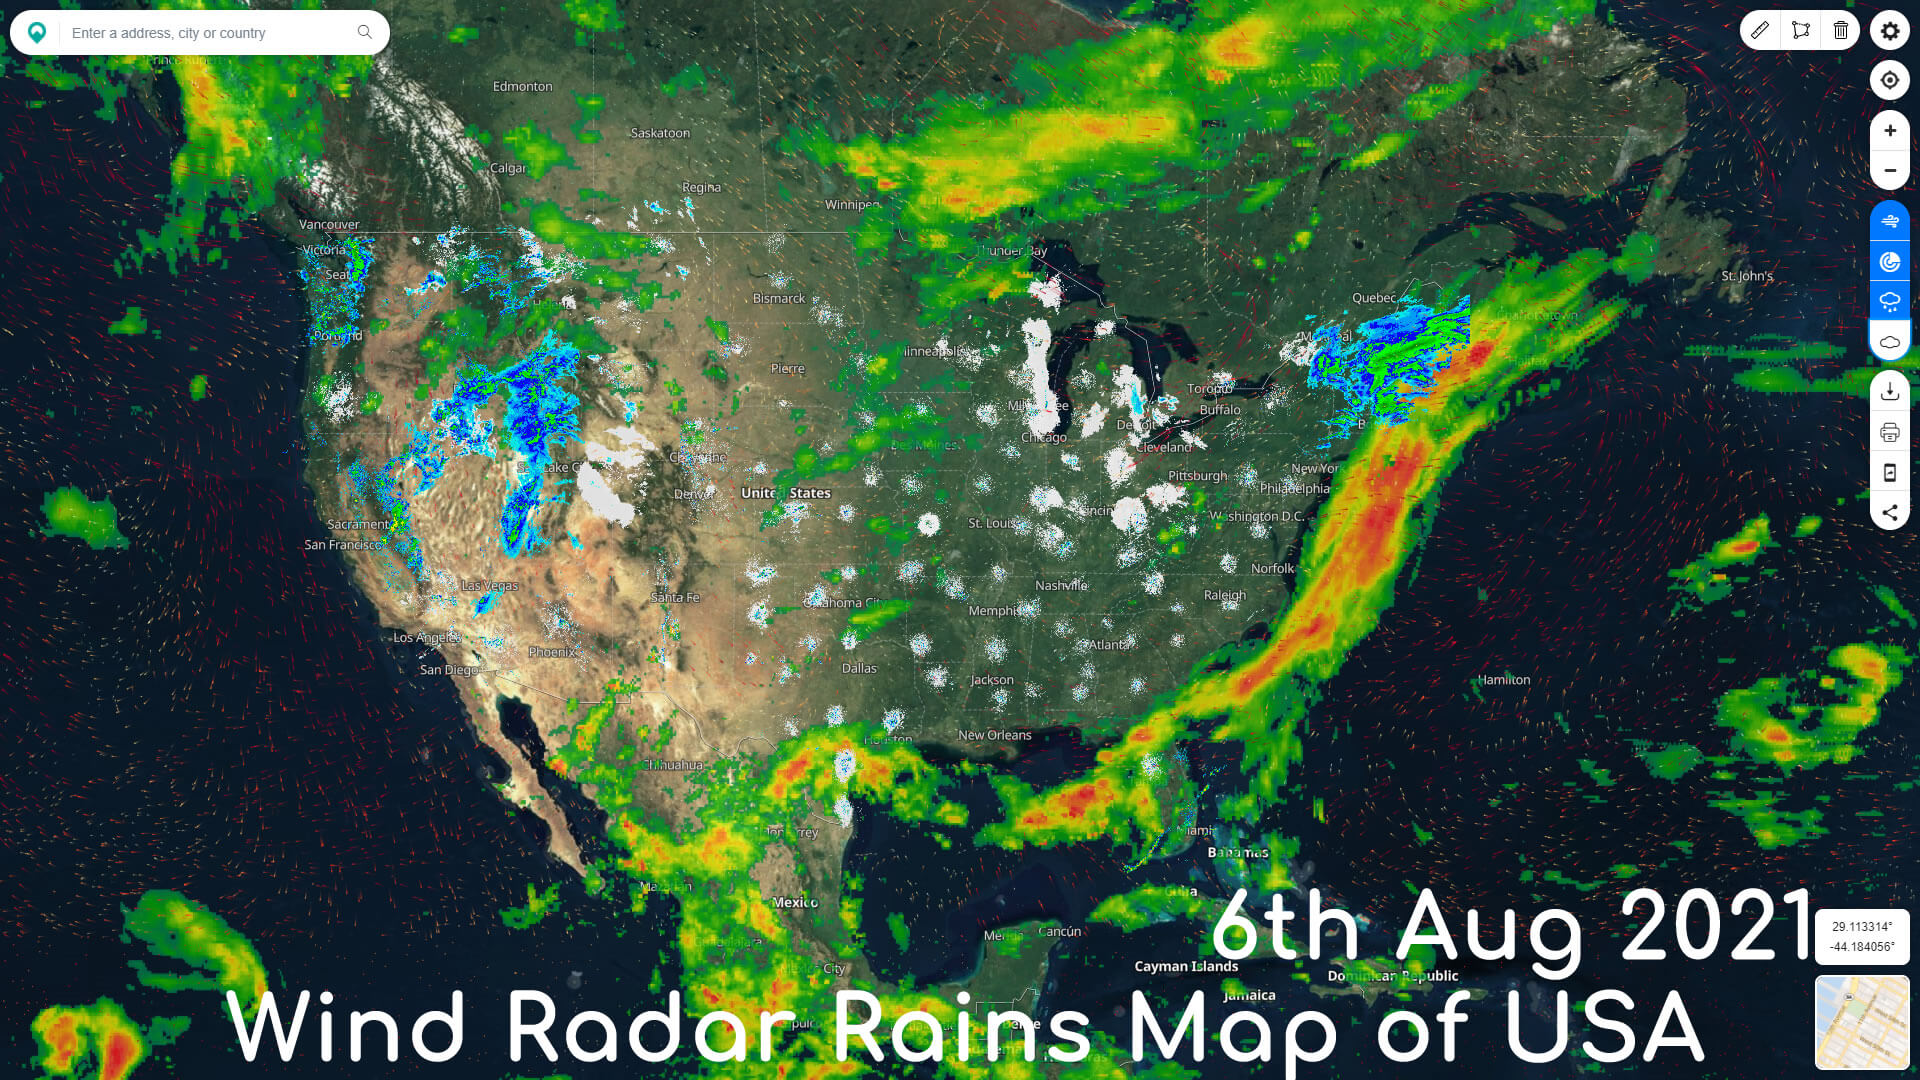 Wind Radar Rains Map of USA